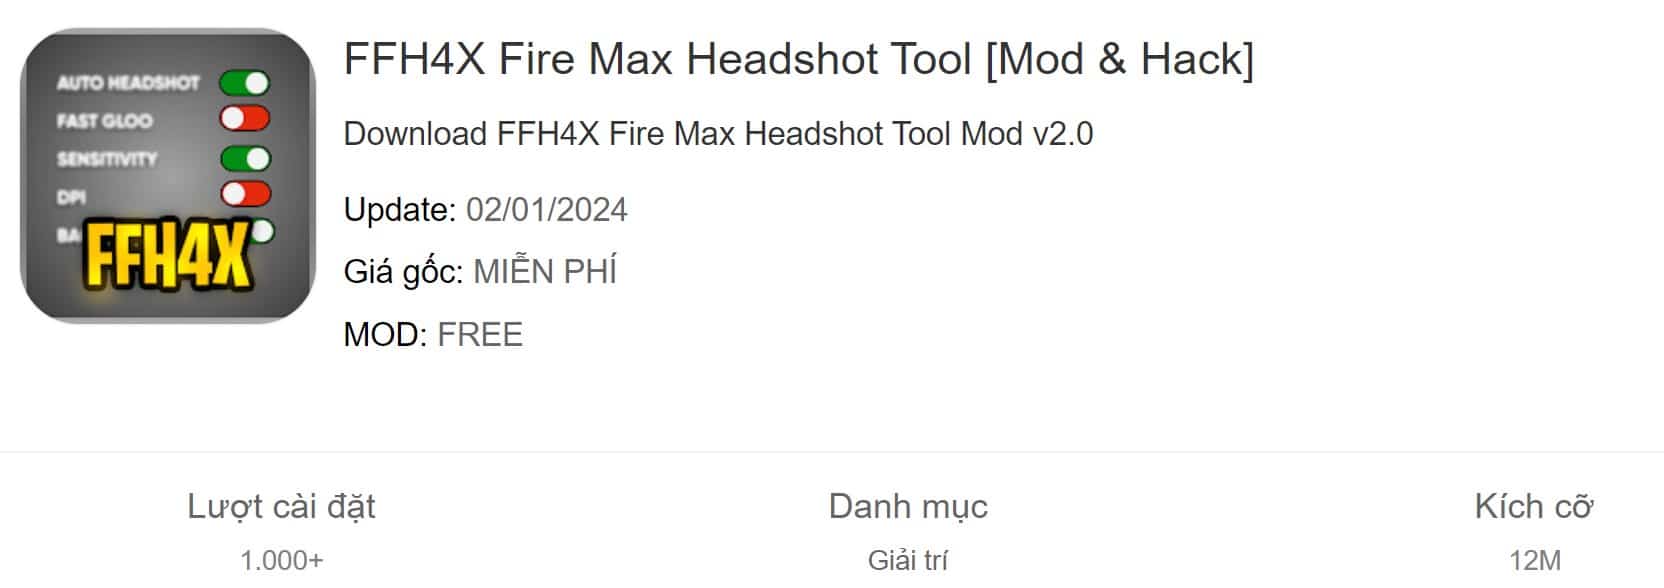 FFH4X Fire Max Headshot Tool 